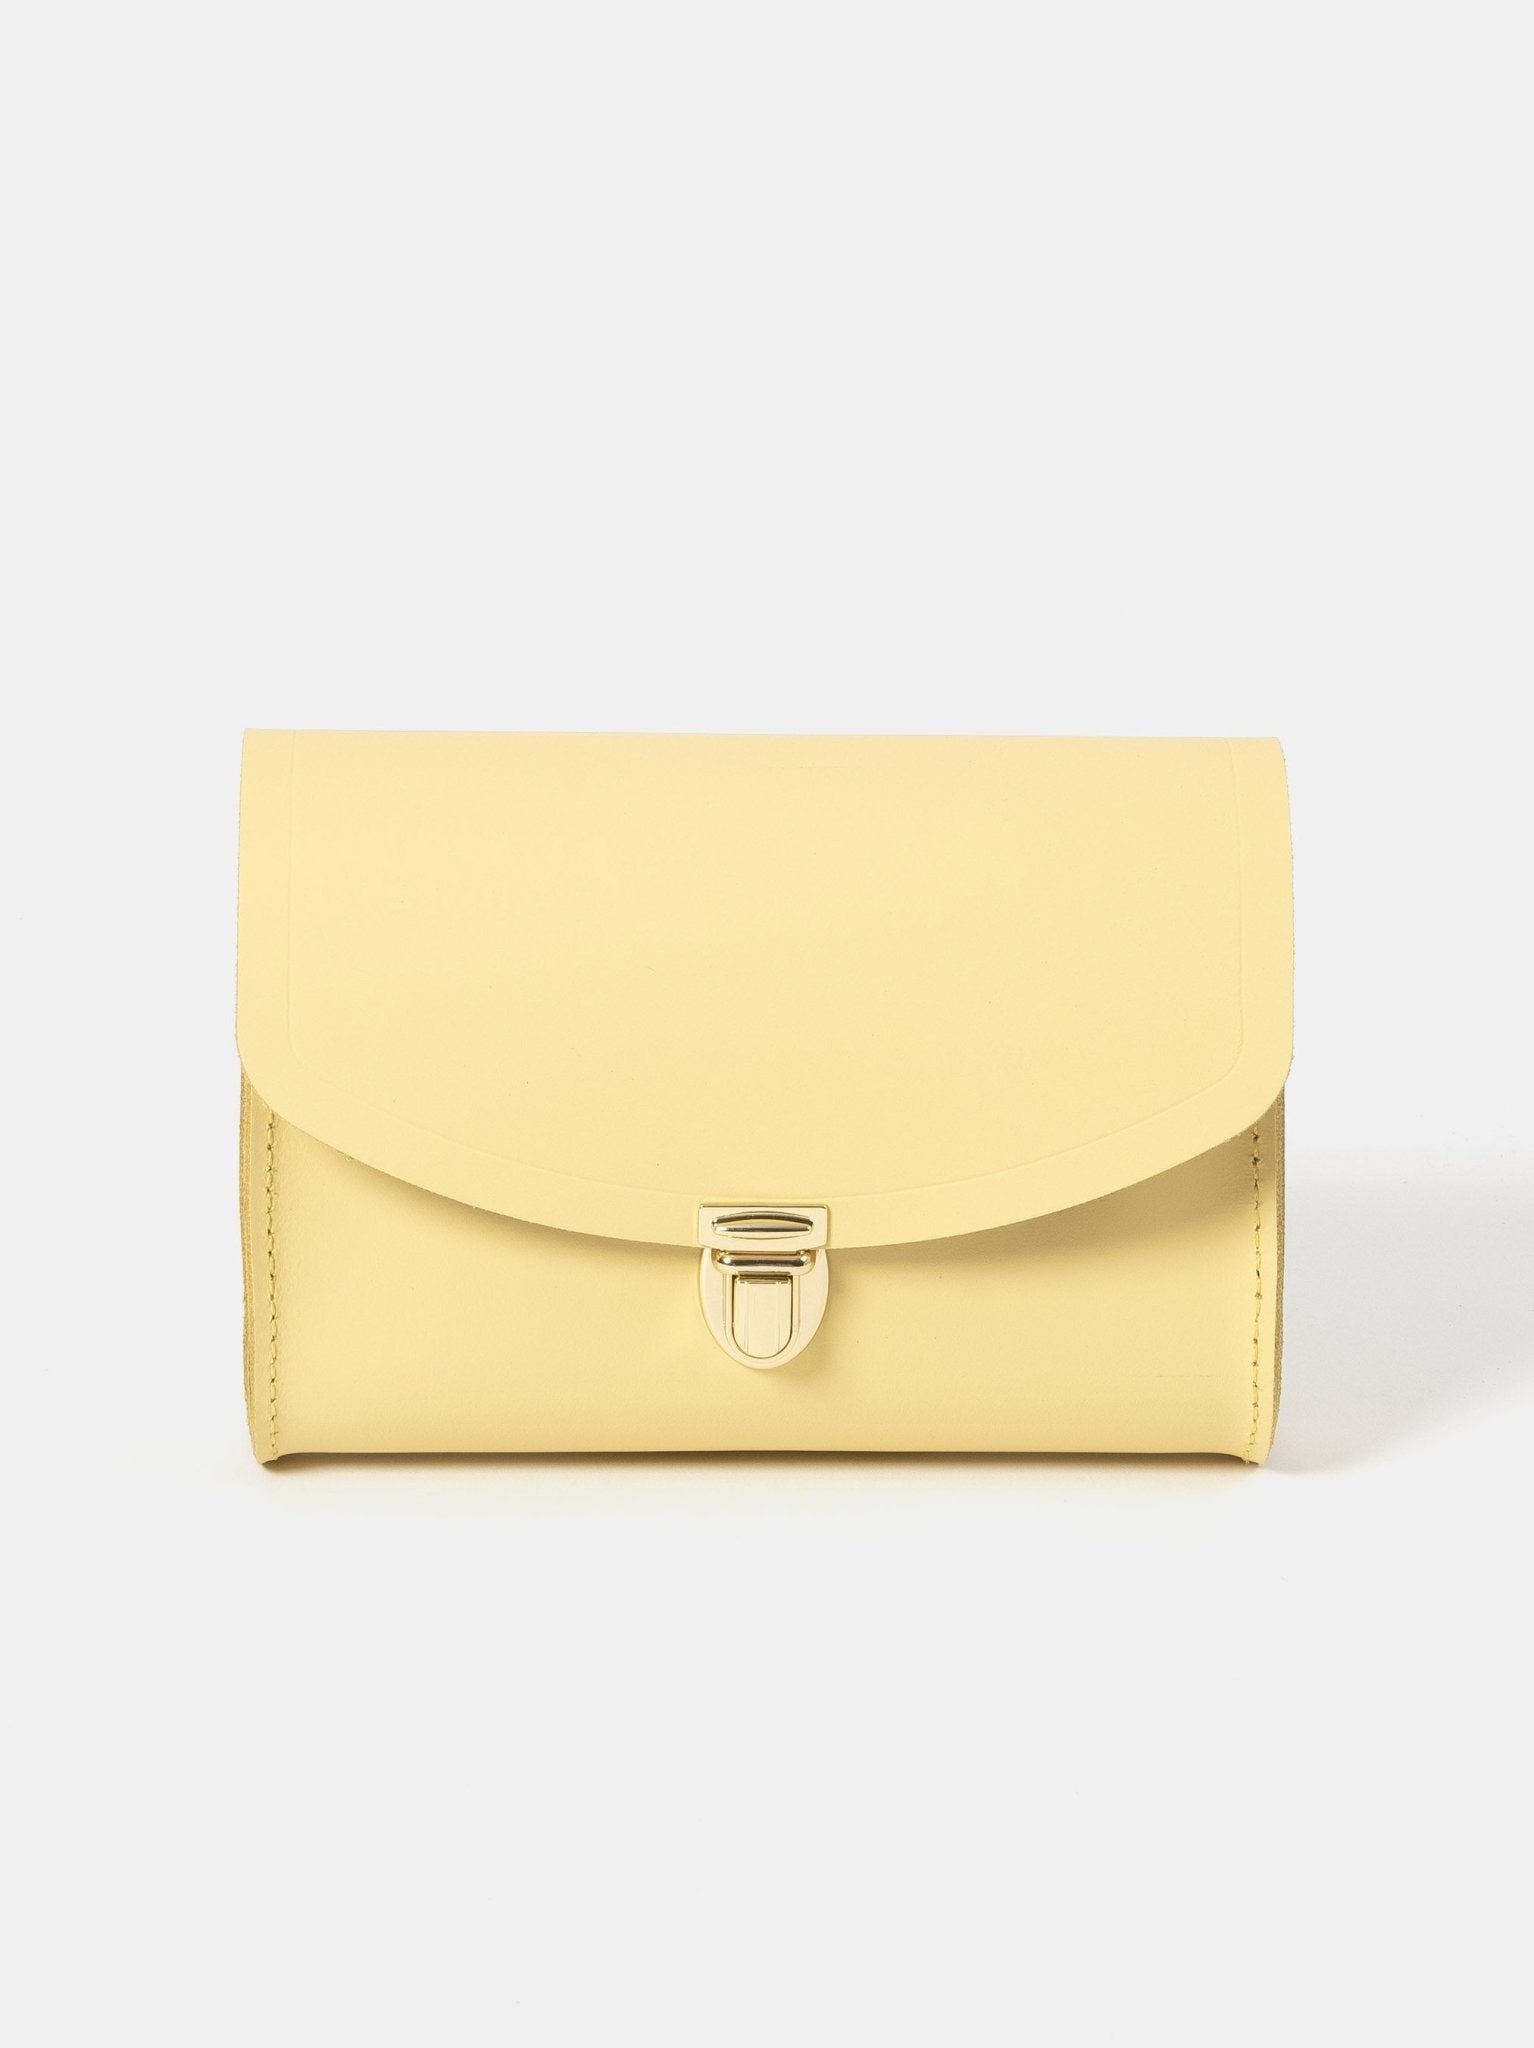 The Cambridge Satchel Co. Women's Yellow Handbag product